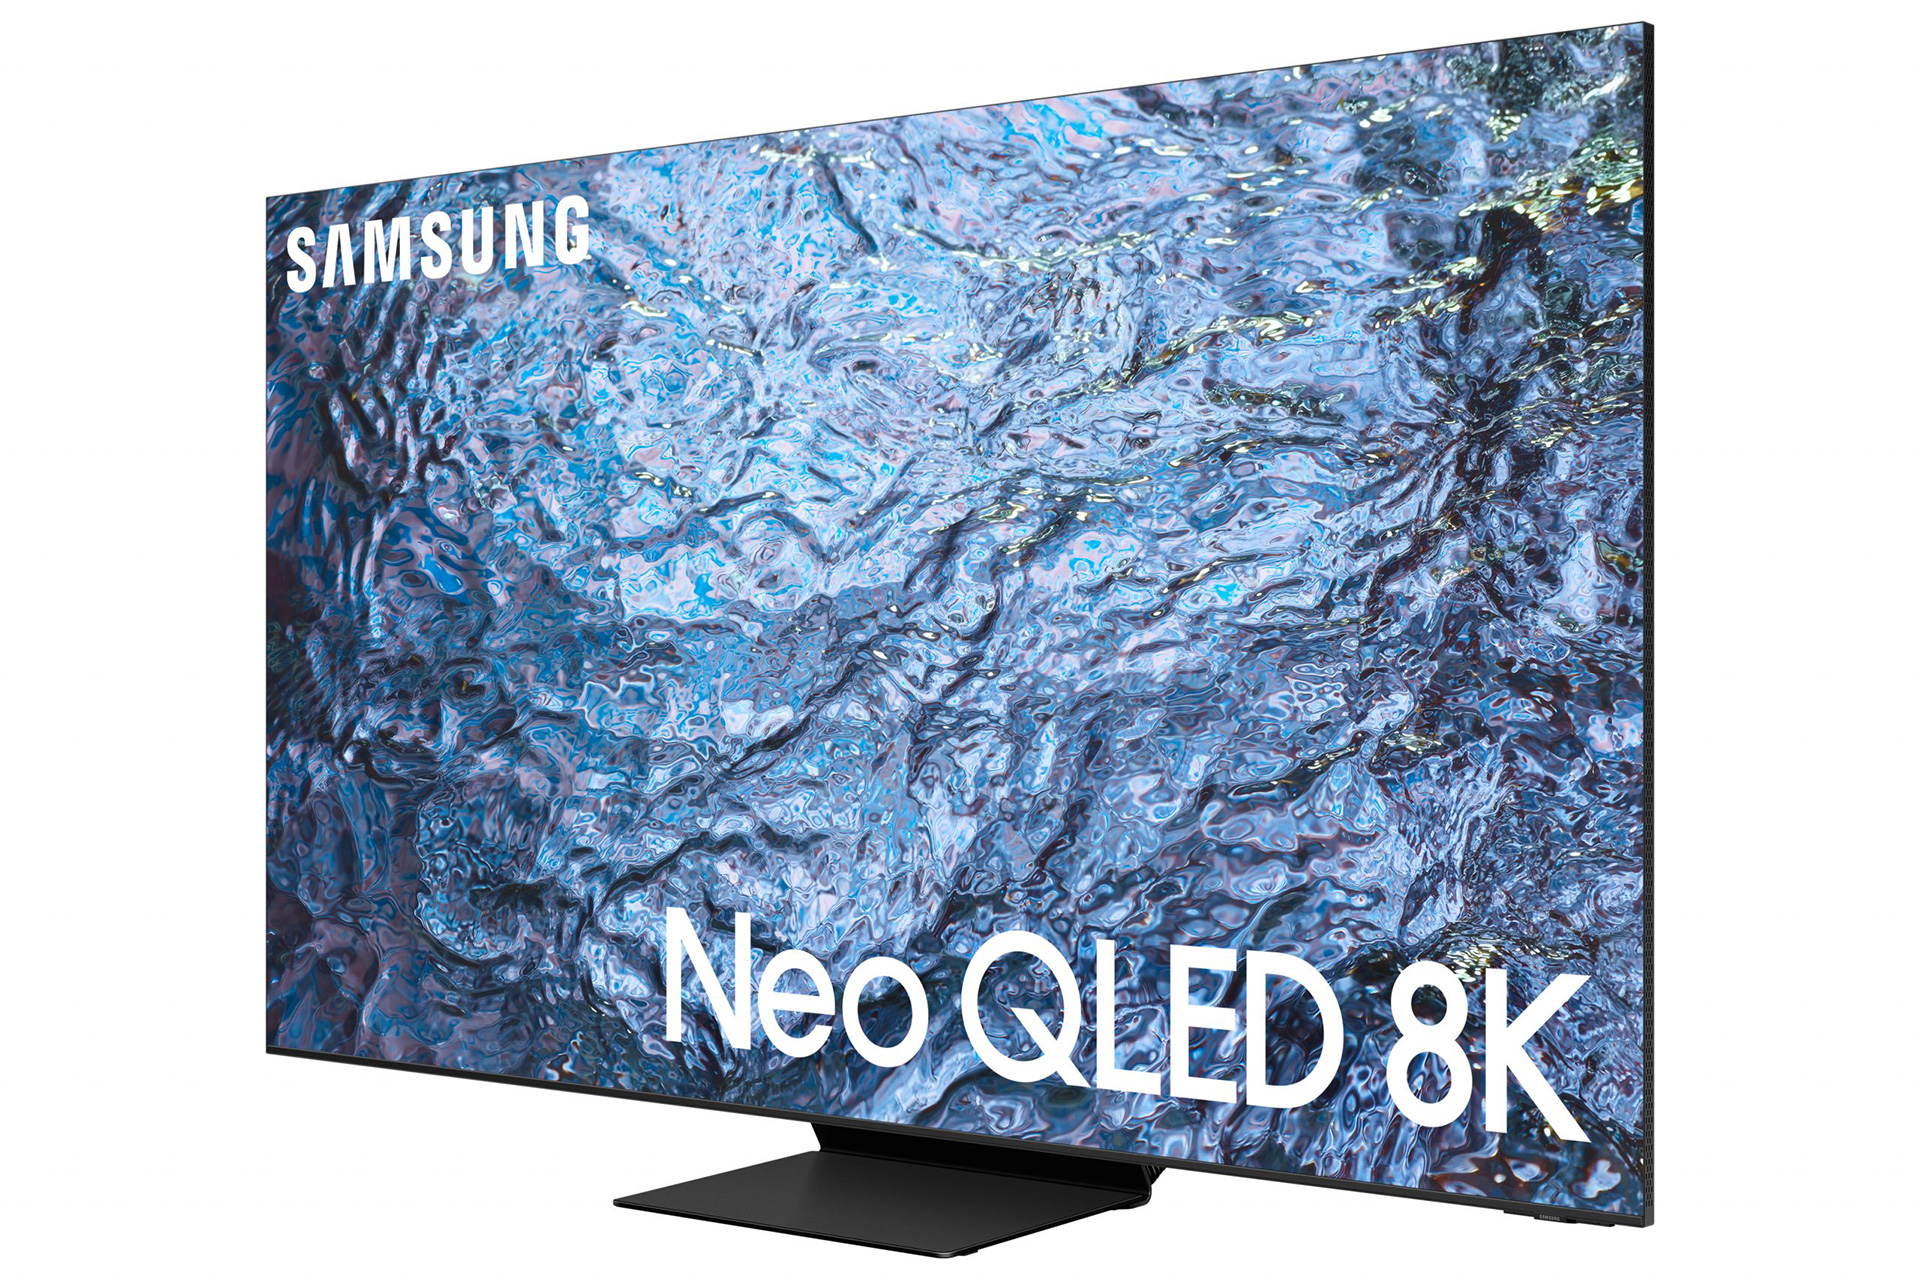 Samsung's 2023 Mini 8K LED TV starts at $5,000